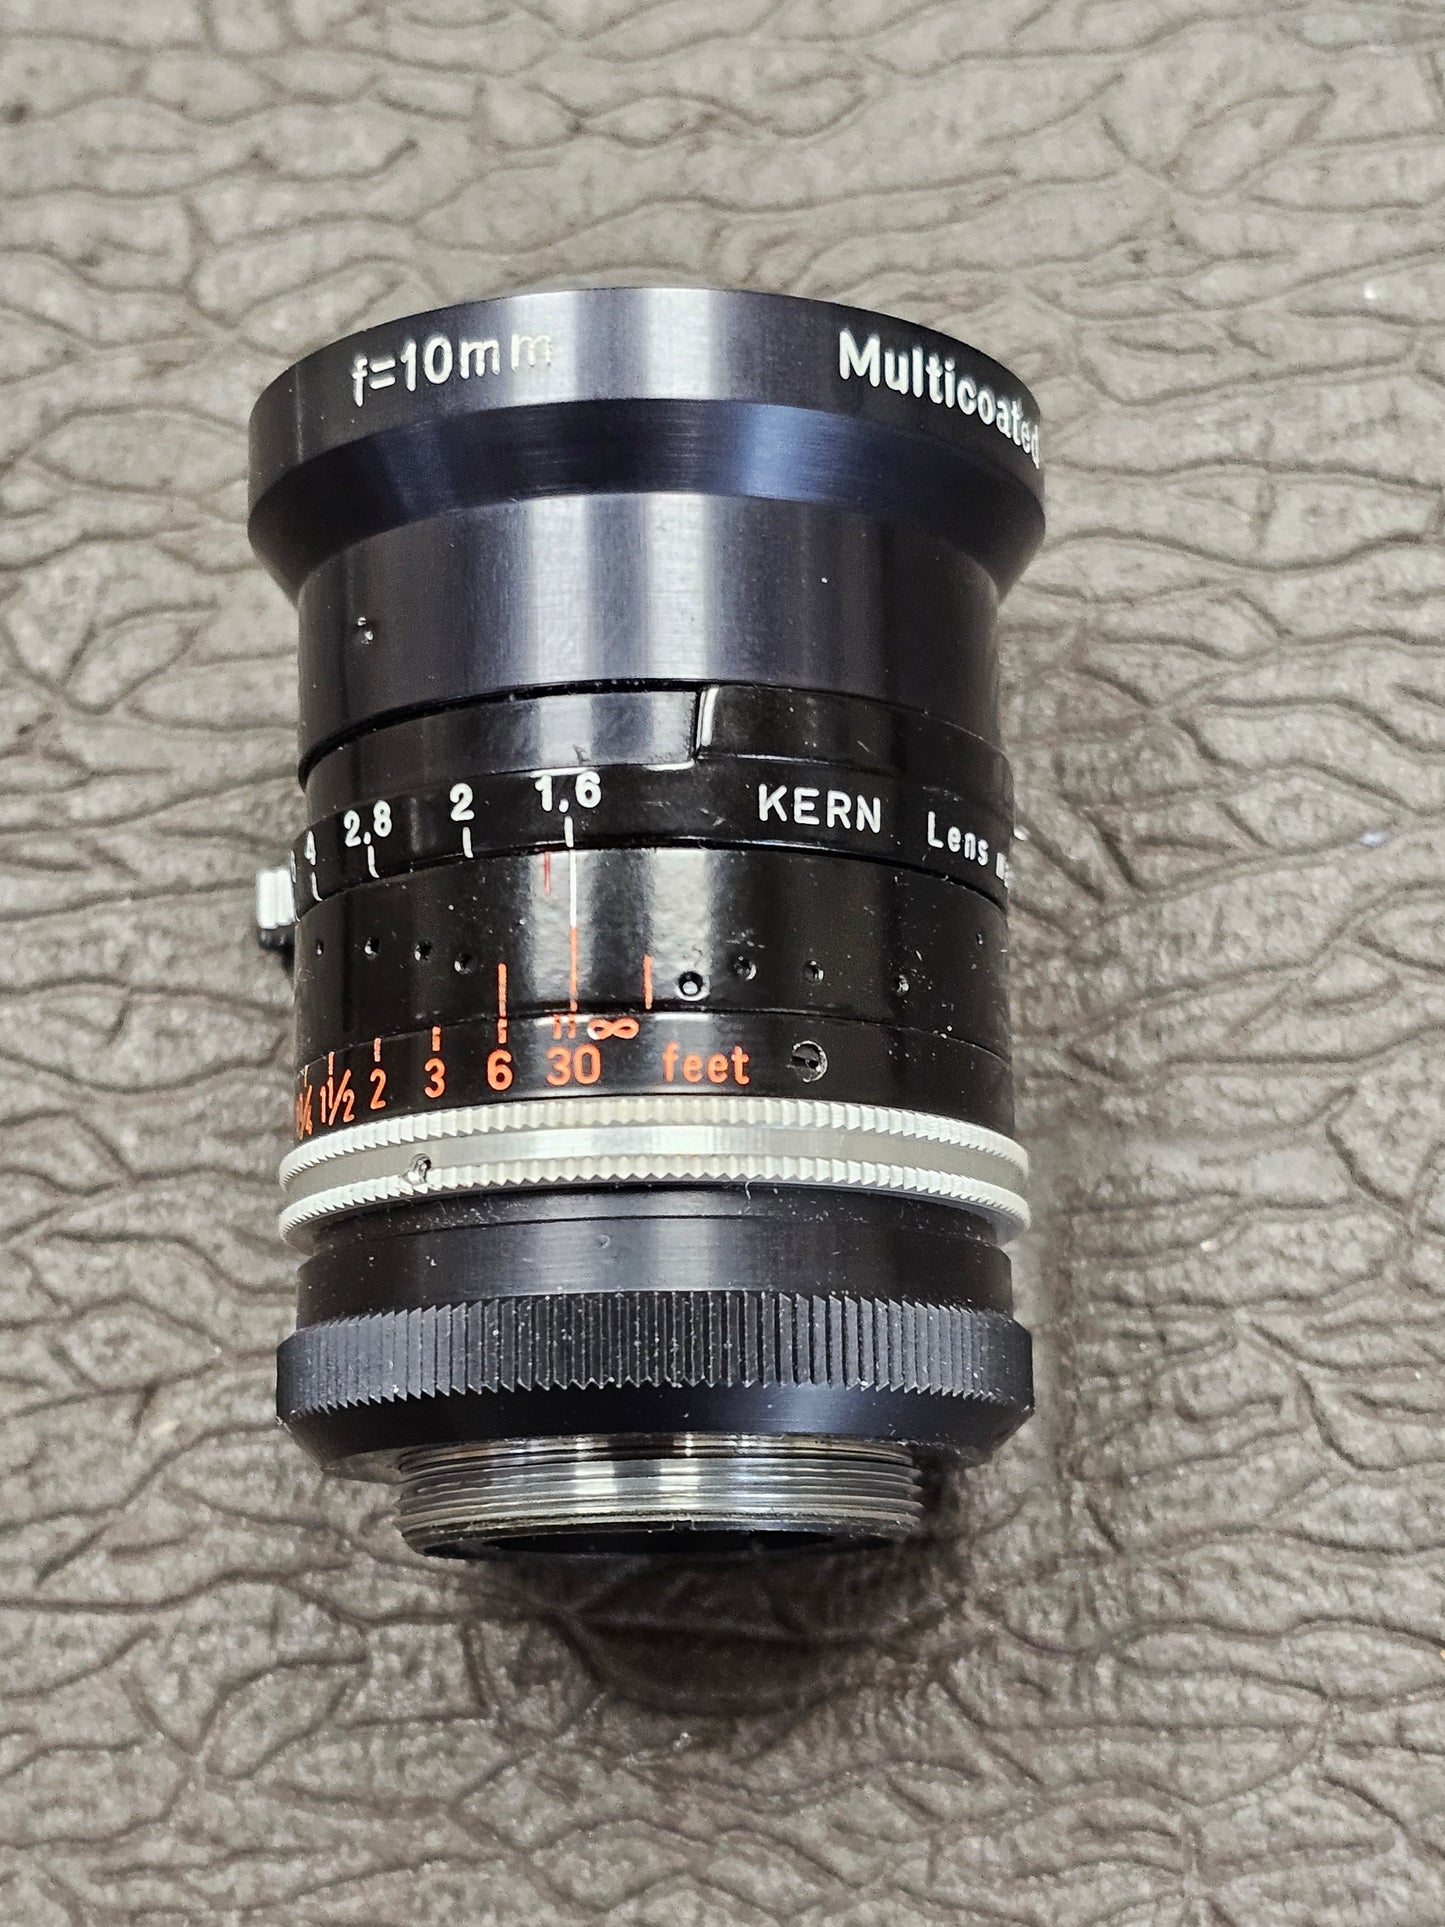 Switar 10mm f/1.6 Multicoated C-Mount ( Black Version) S# 1145731